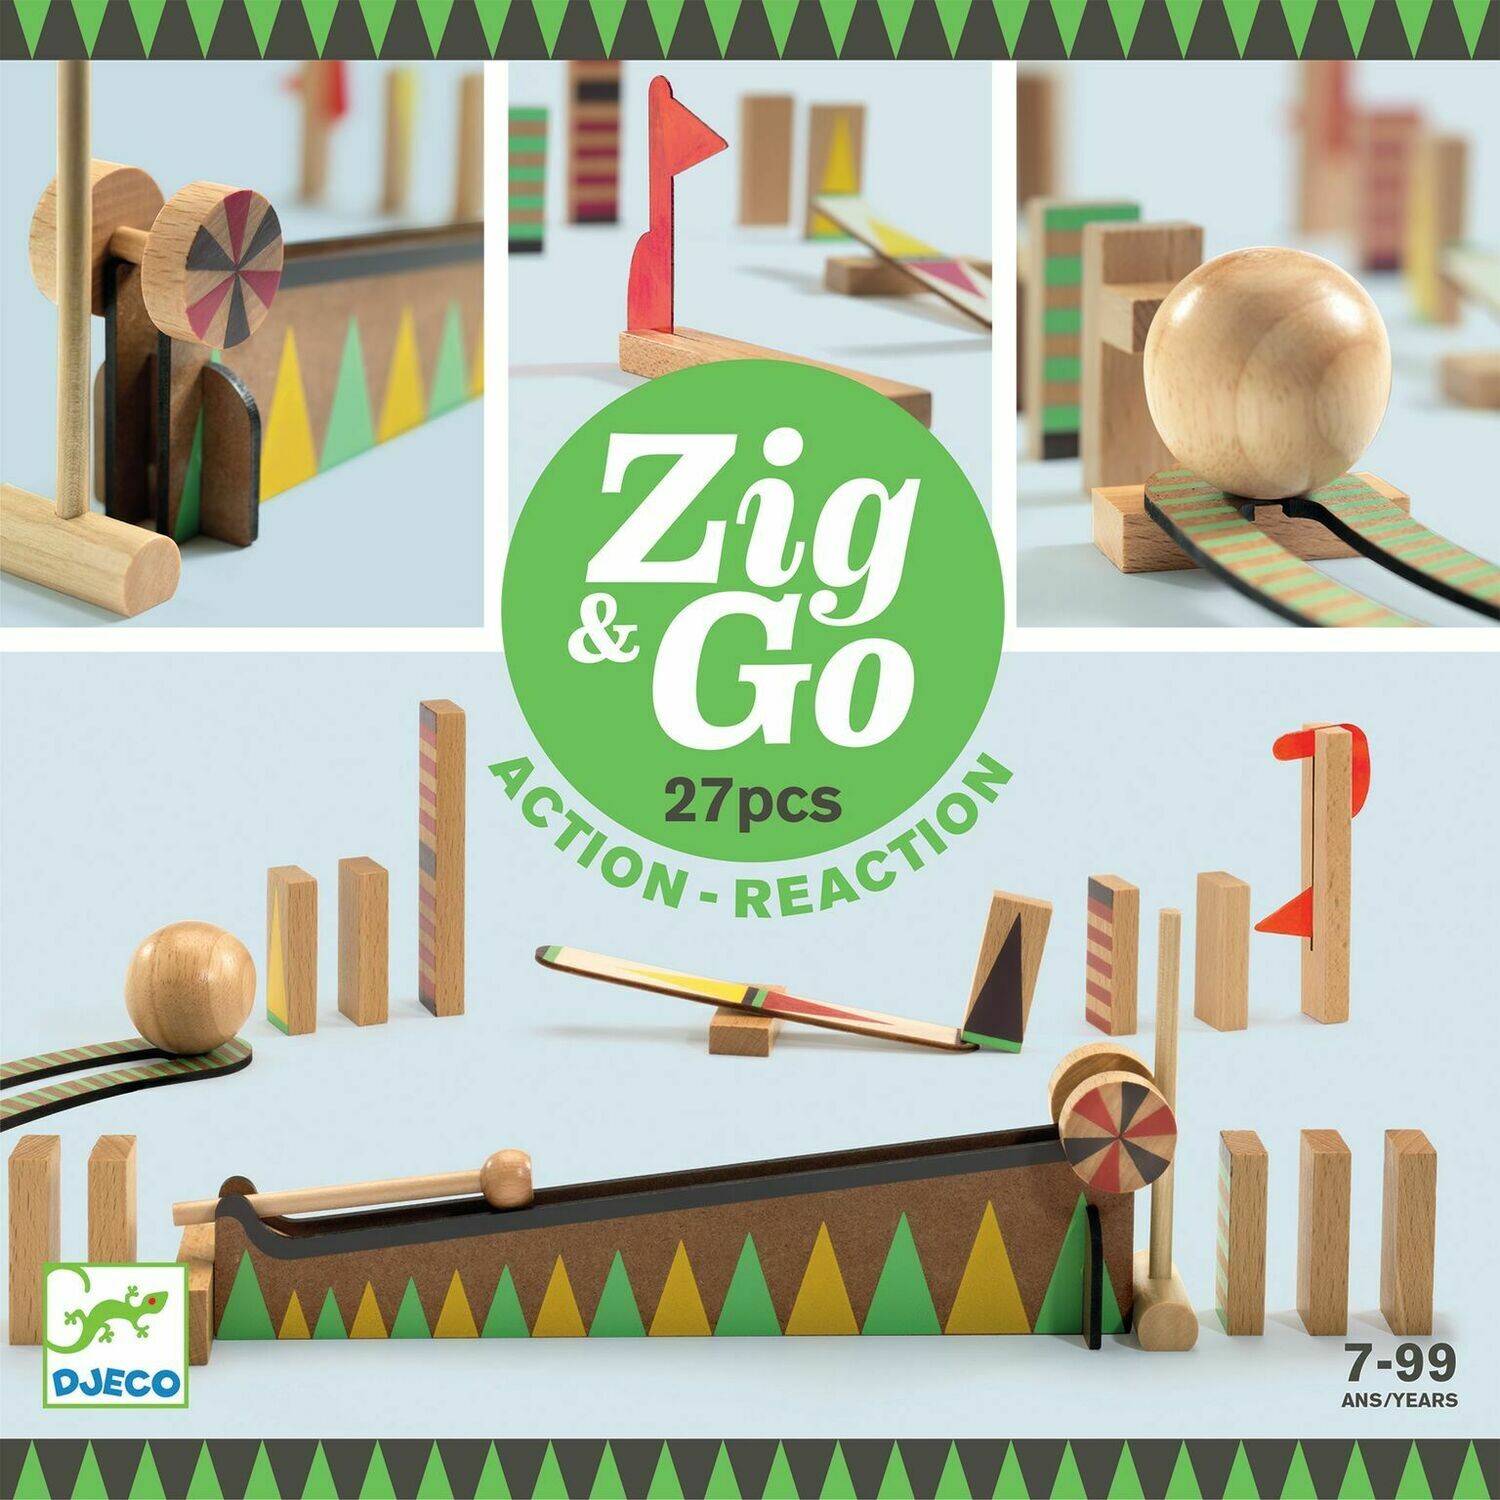 ZIG & GO ACTION REACTION - 27pcs